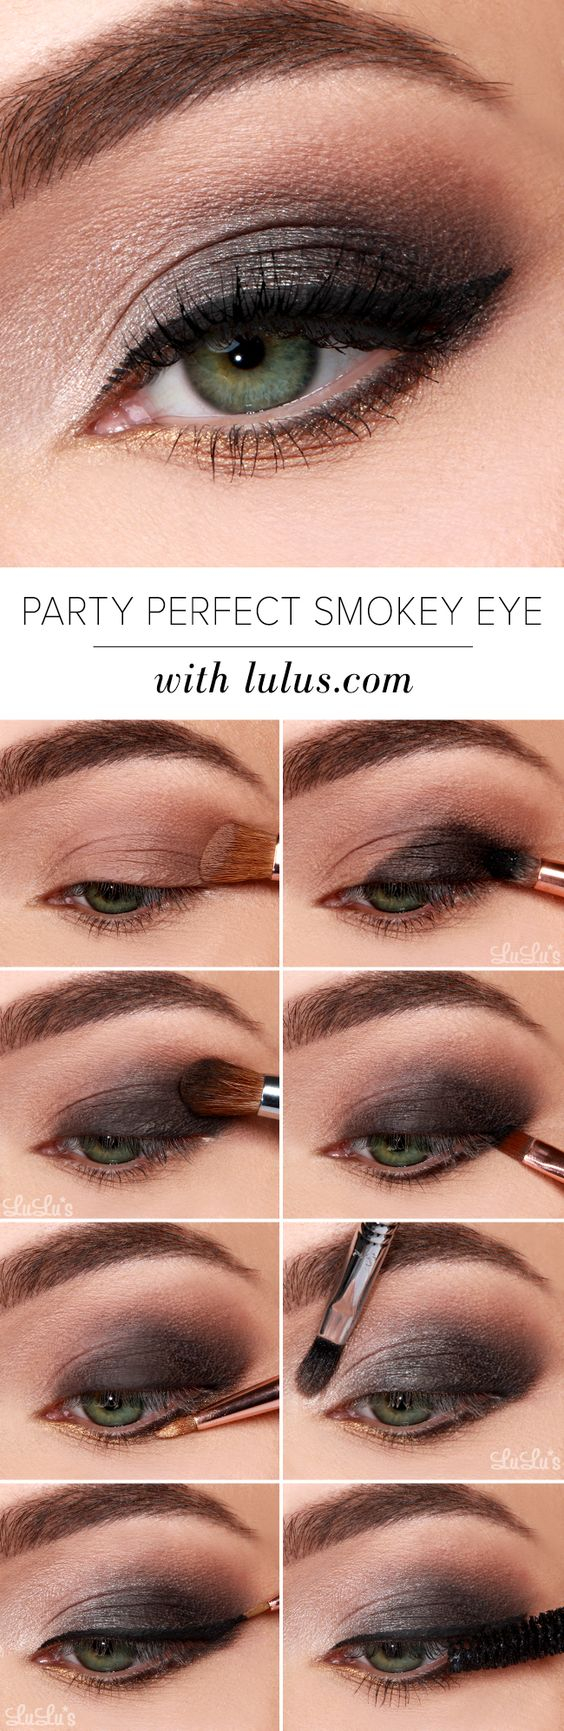 Makeup Tutorial For Hazel Eyes 40 Hottest Smokey Eye Makeup Ideas 2019 Smokey Eye Tutorials For